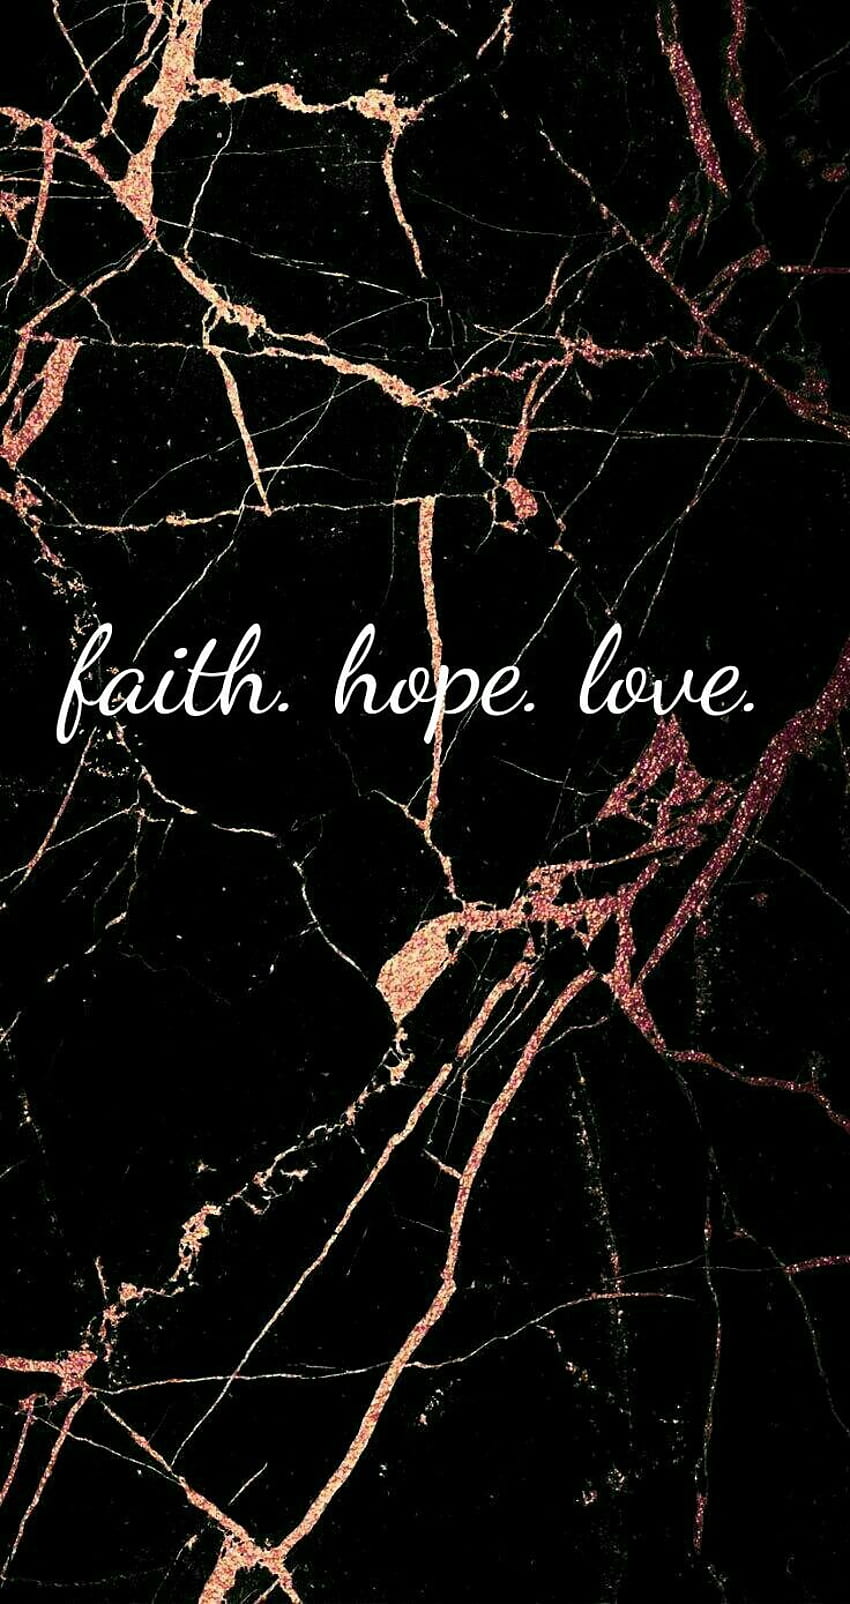 105005 Faith Hope Love Images Stock Photos  Vectors  Shutterstock